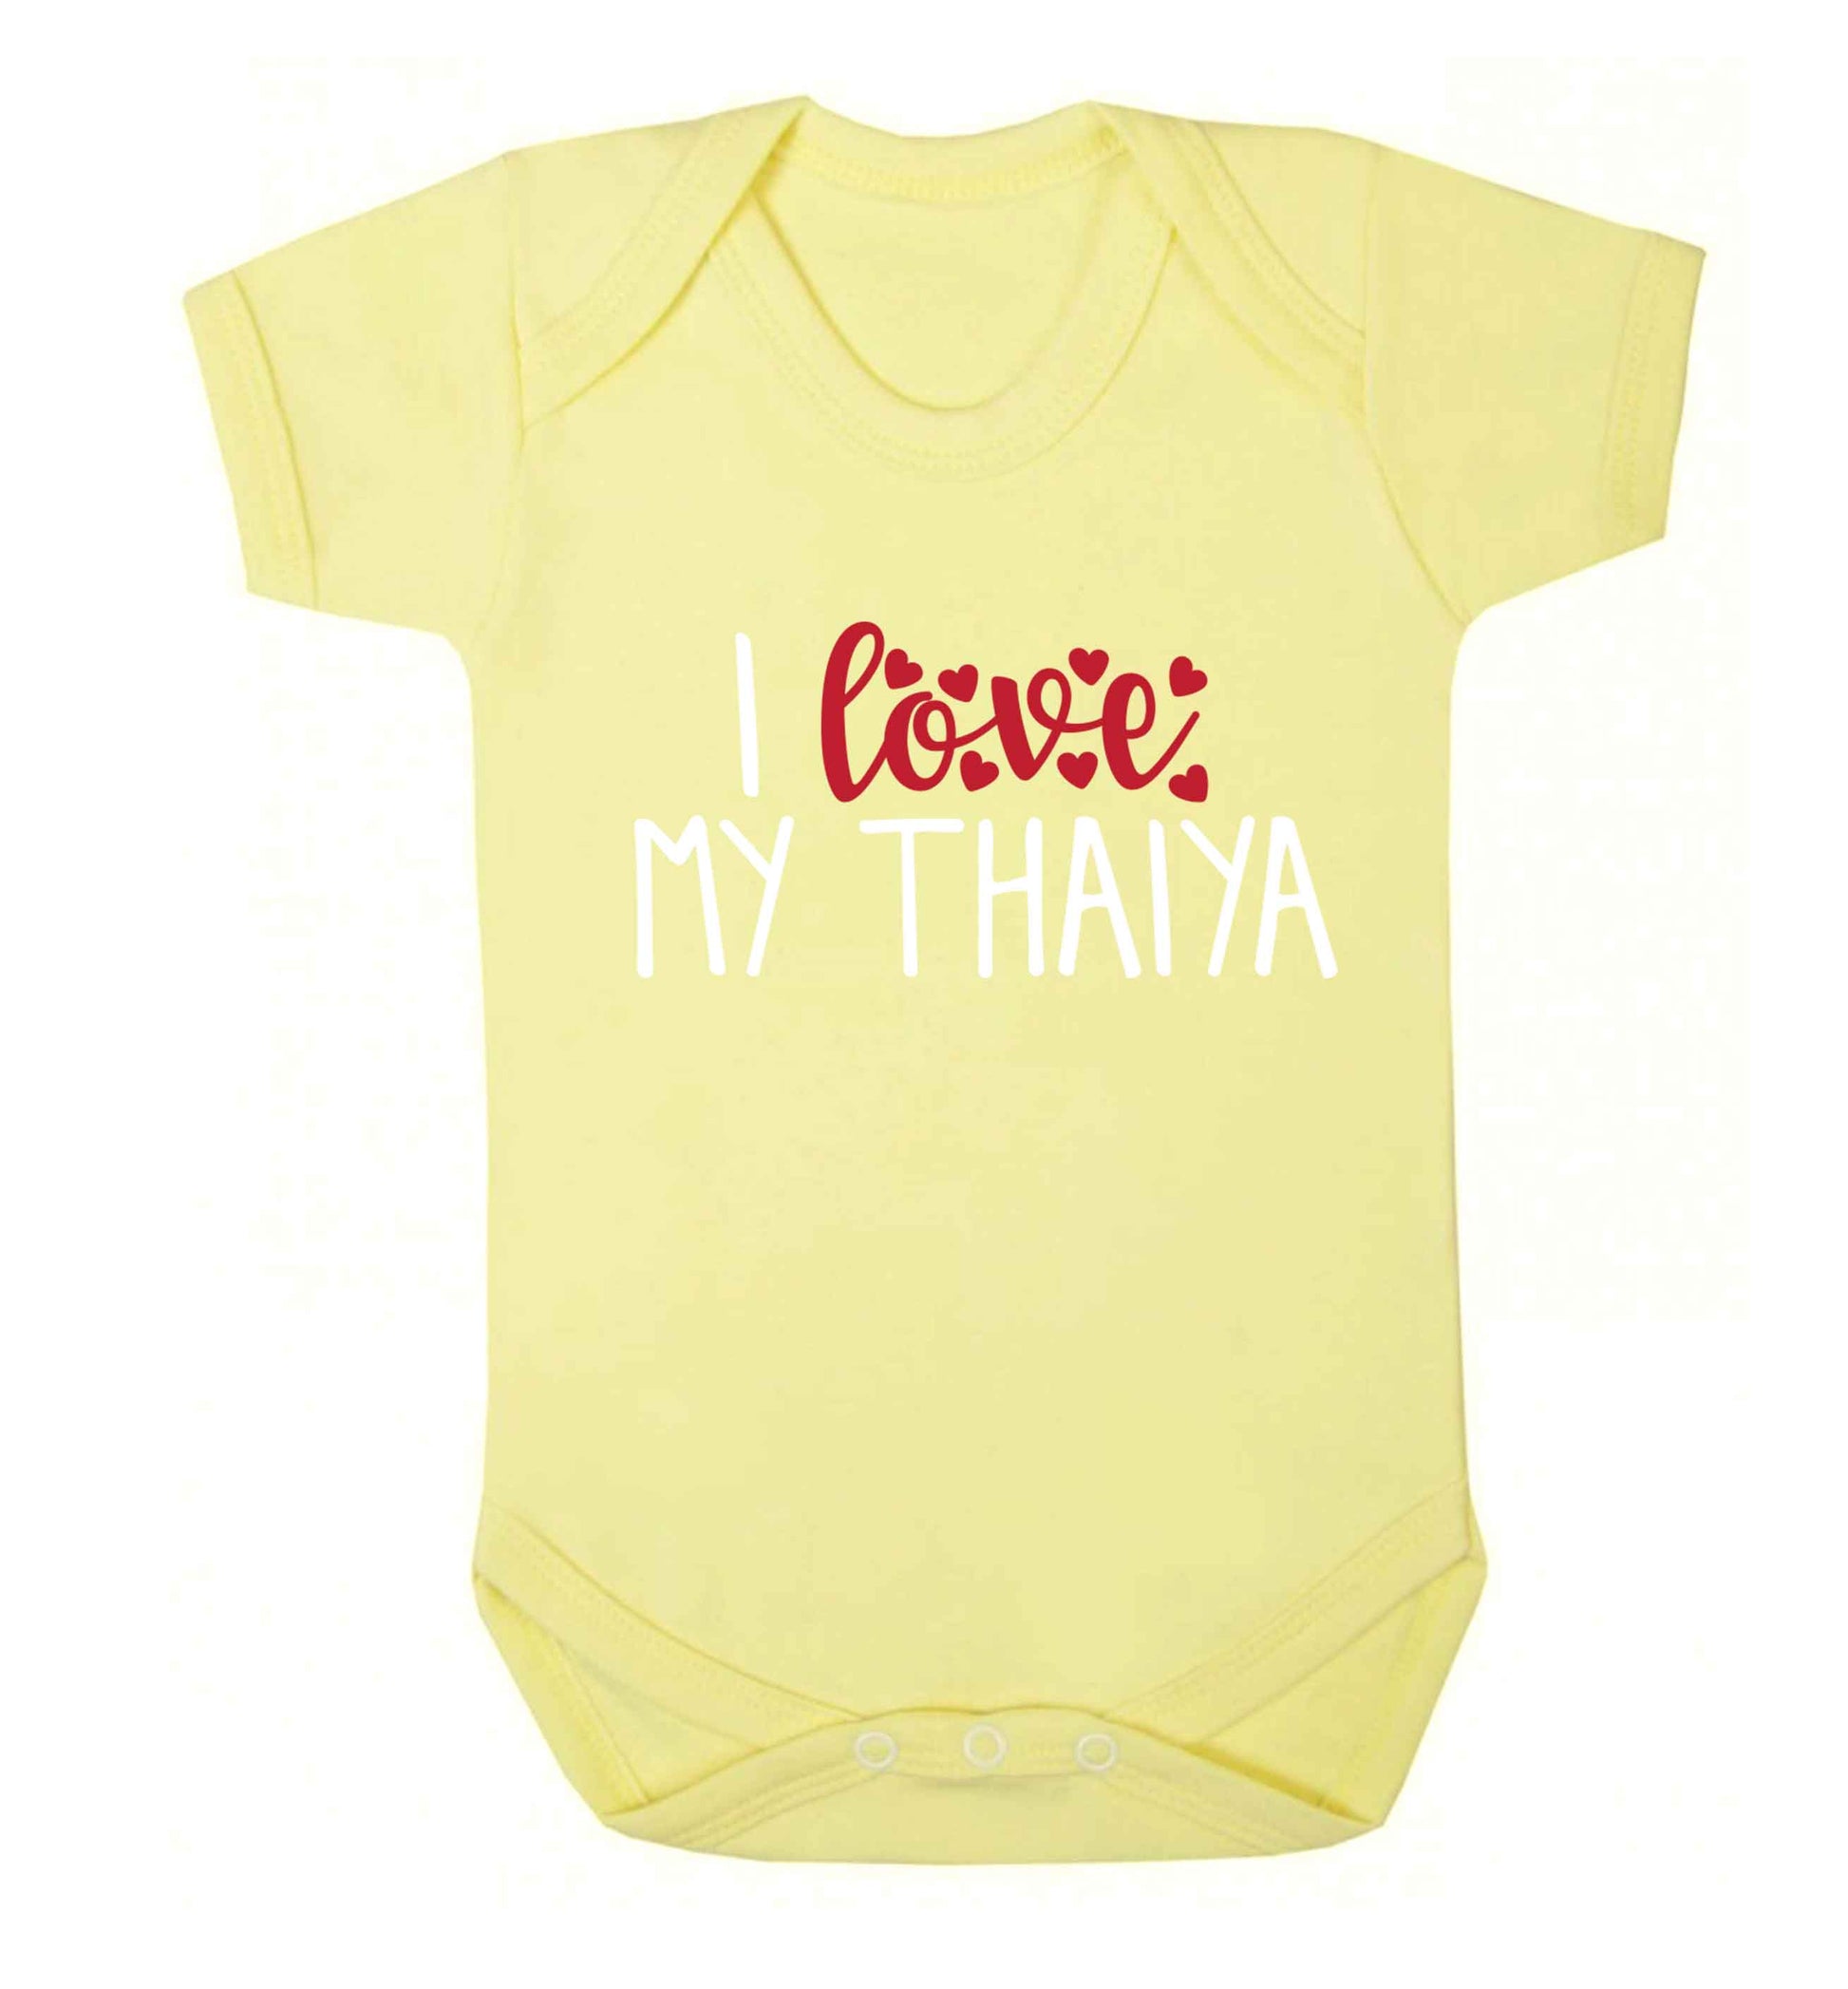 I love my thaiya Baby Vest pale yellow 18-24 months